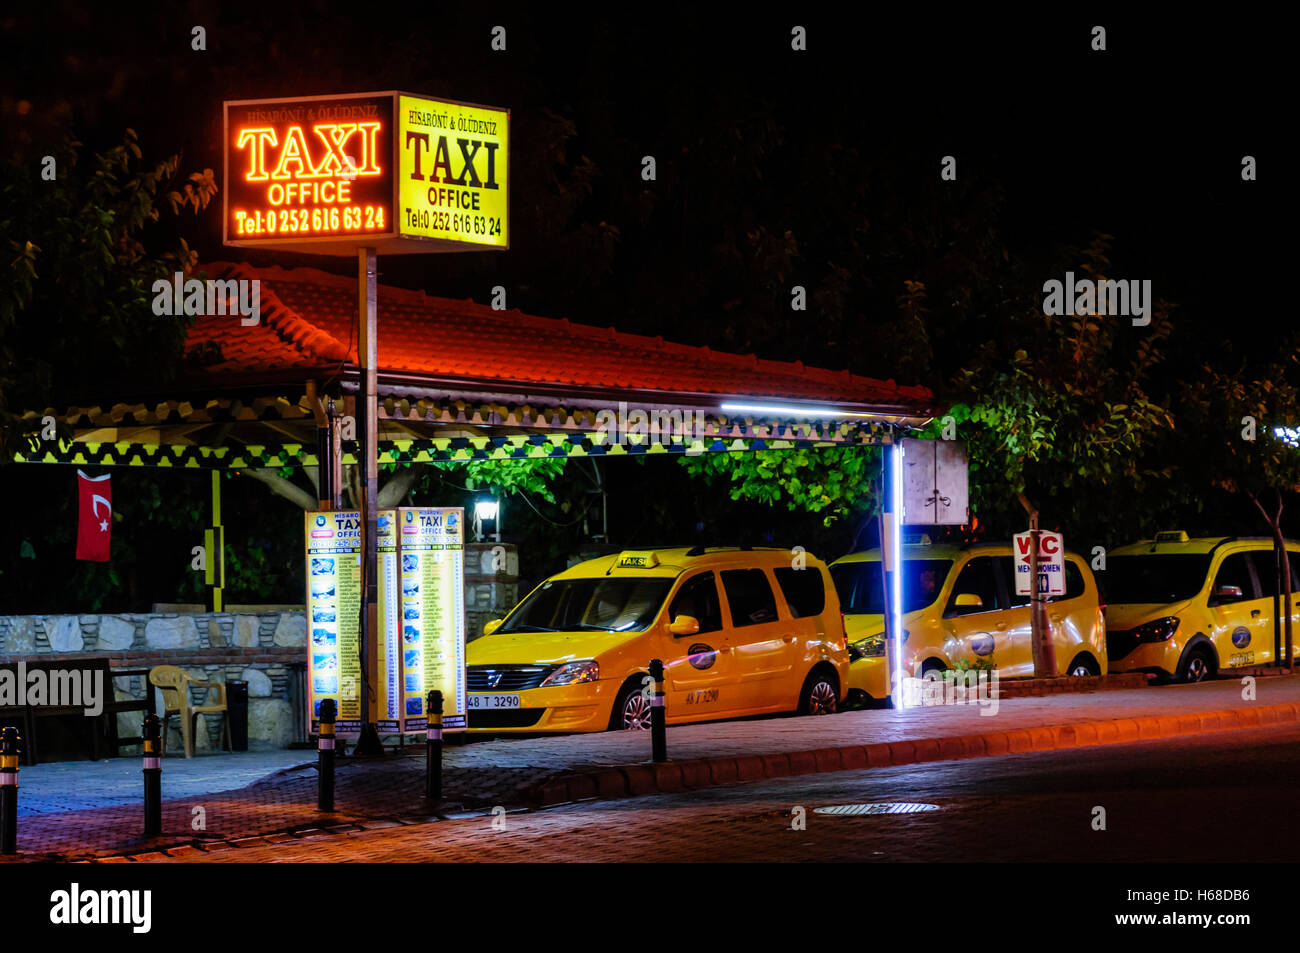 Taxi rank office at night in Hisaronu, Oludeniz, Fethiye, Turkey. Stock Photo